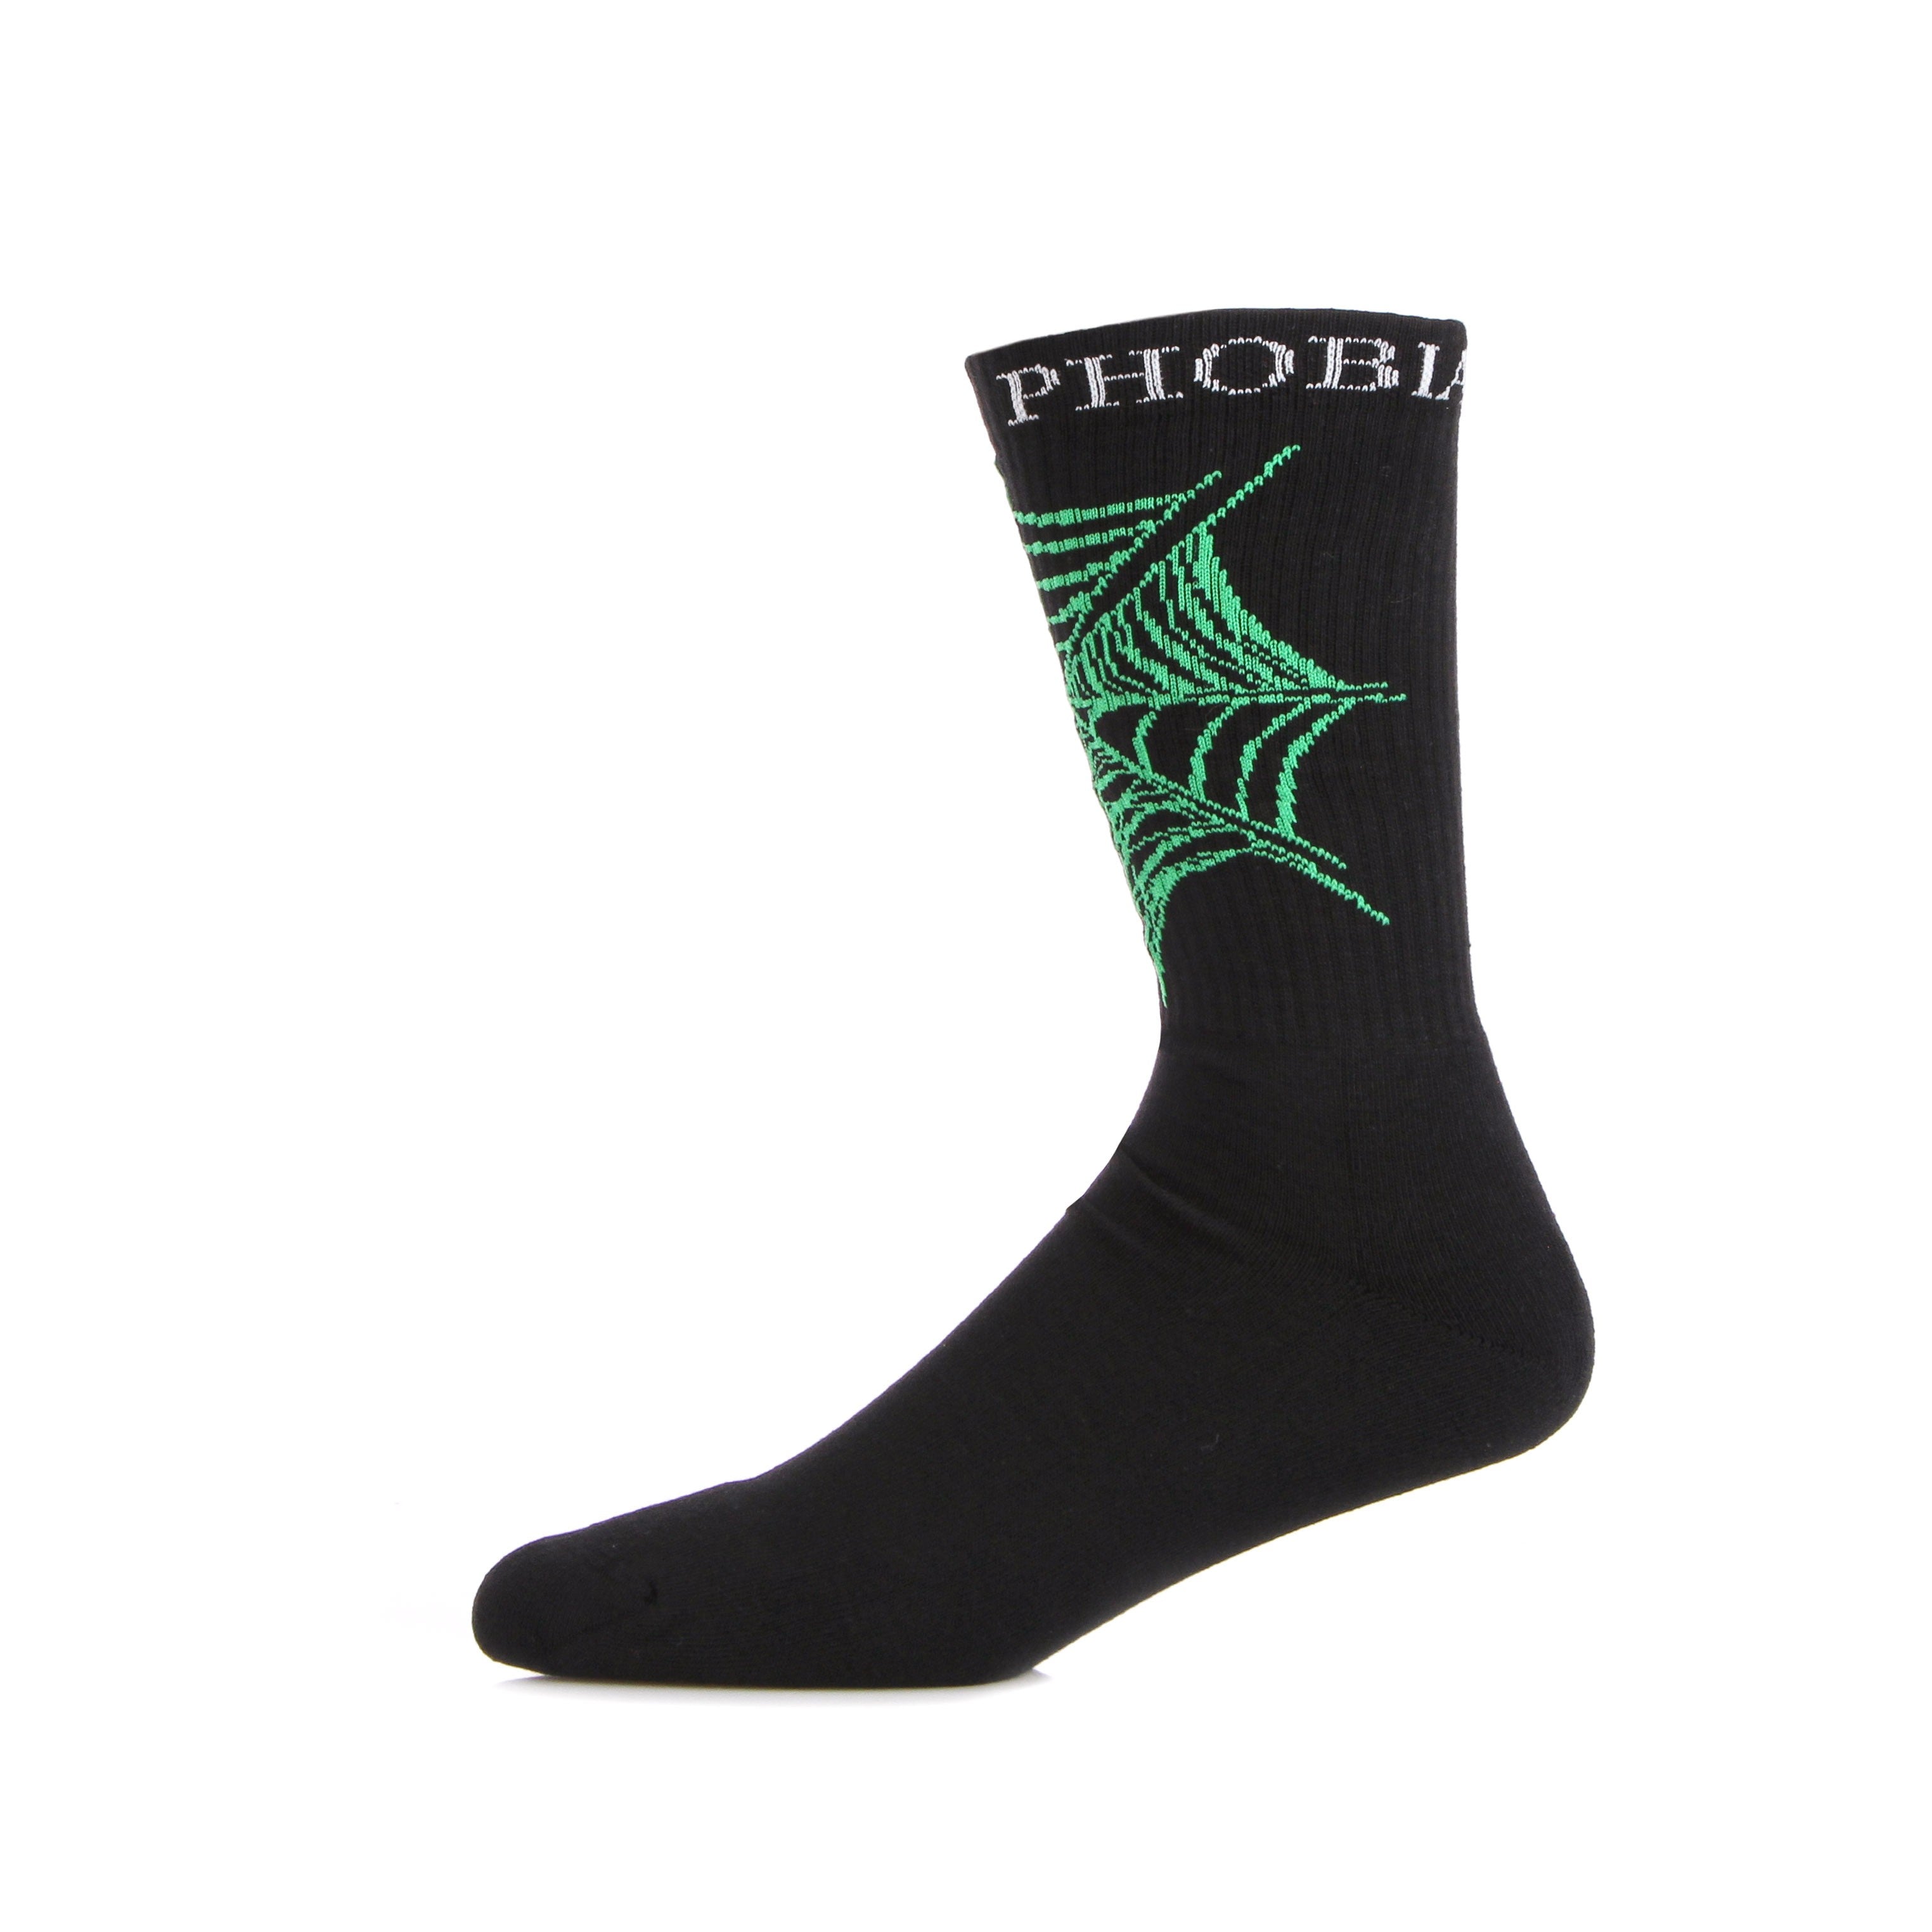 Phobia, Calza Media Uomo Green Webcob Socks, Black/green